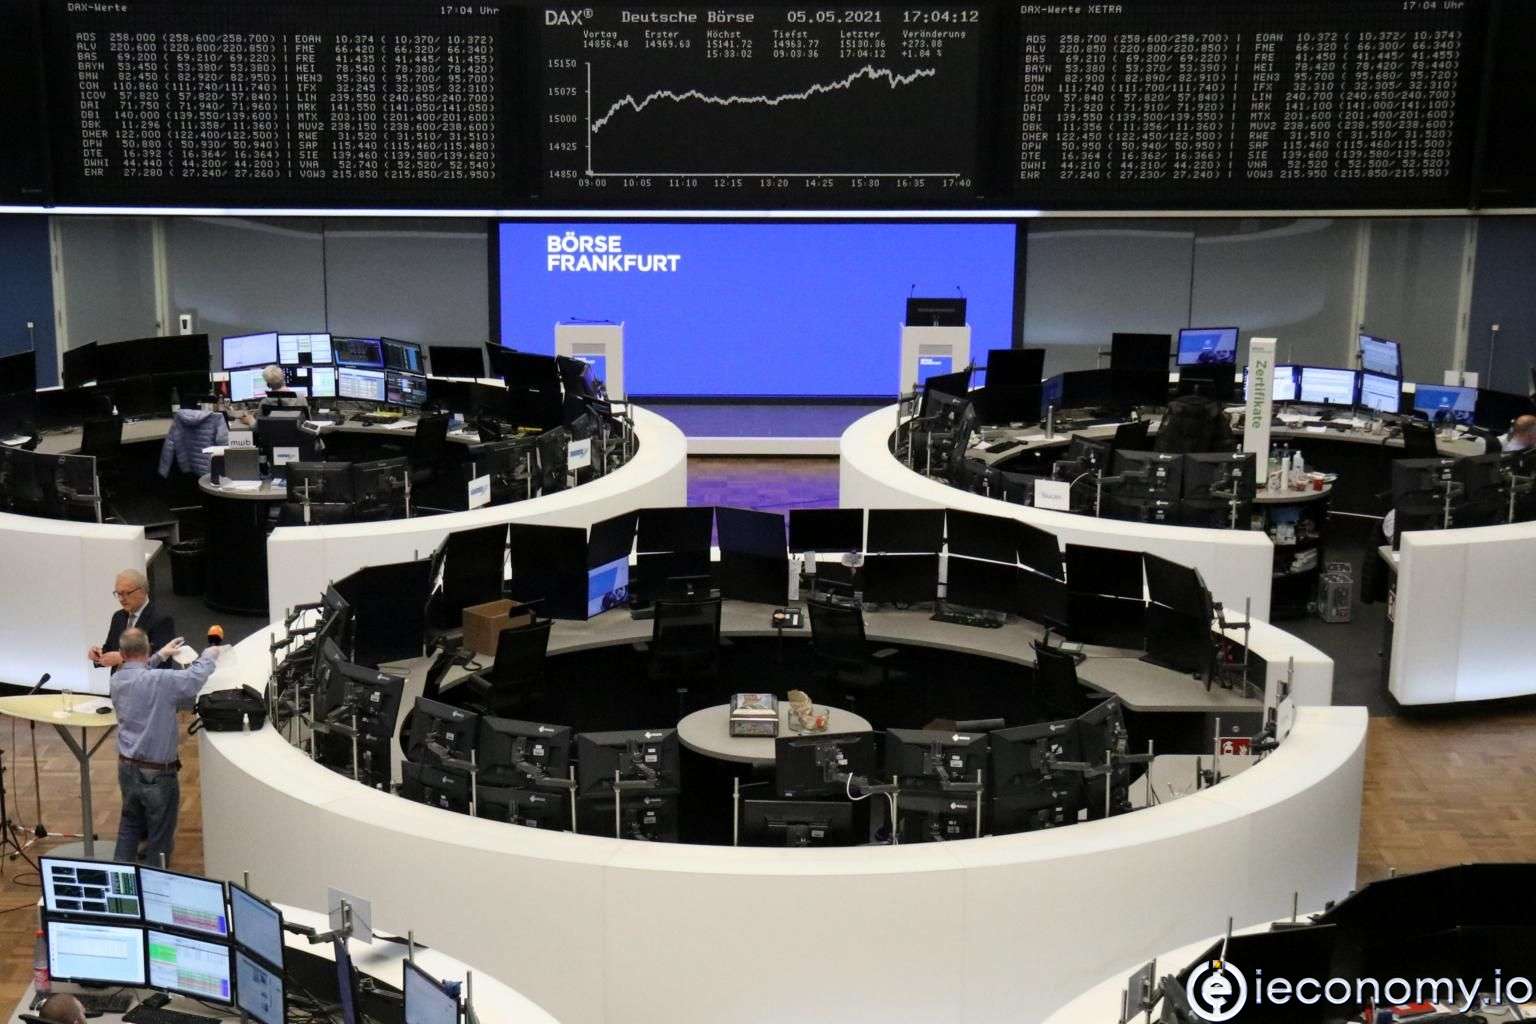 Investors are fleeing the European stock markets